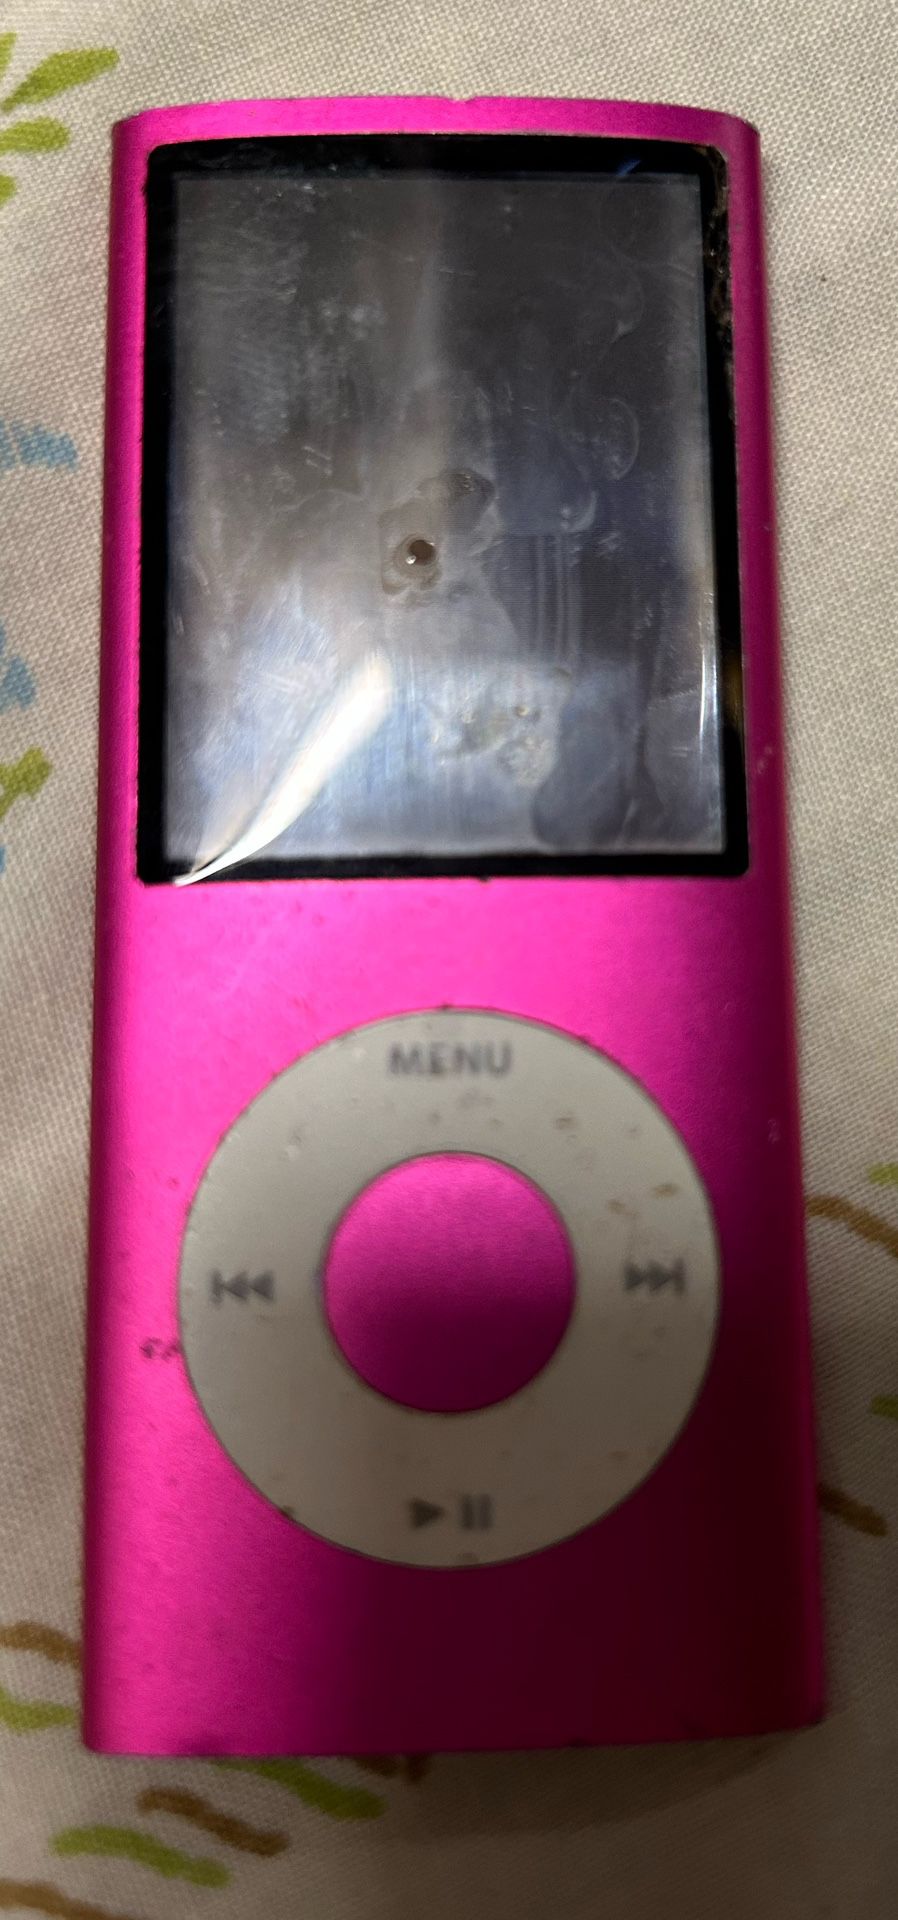 Bliv forvirret alarm har en finger i kagen Apple iPod Nano 4th Generation 8GB MP3 AAC Player A1285 Pink for Sale in  Baton Rouge, LA - OfferUp